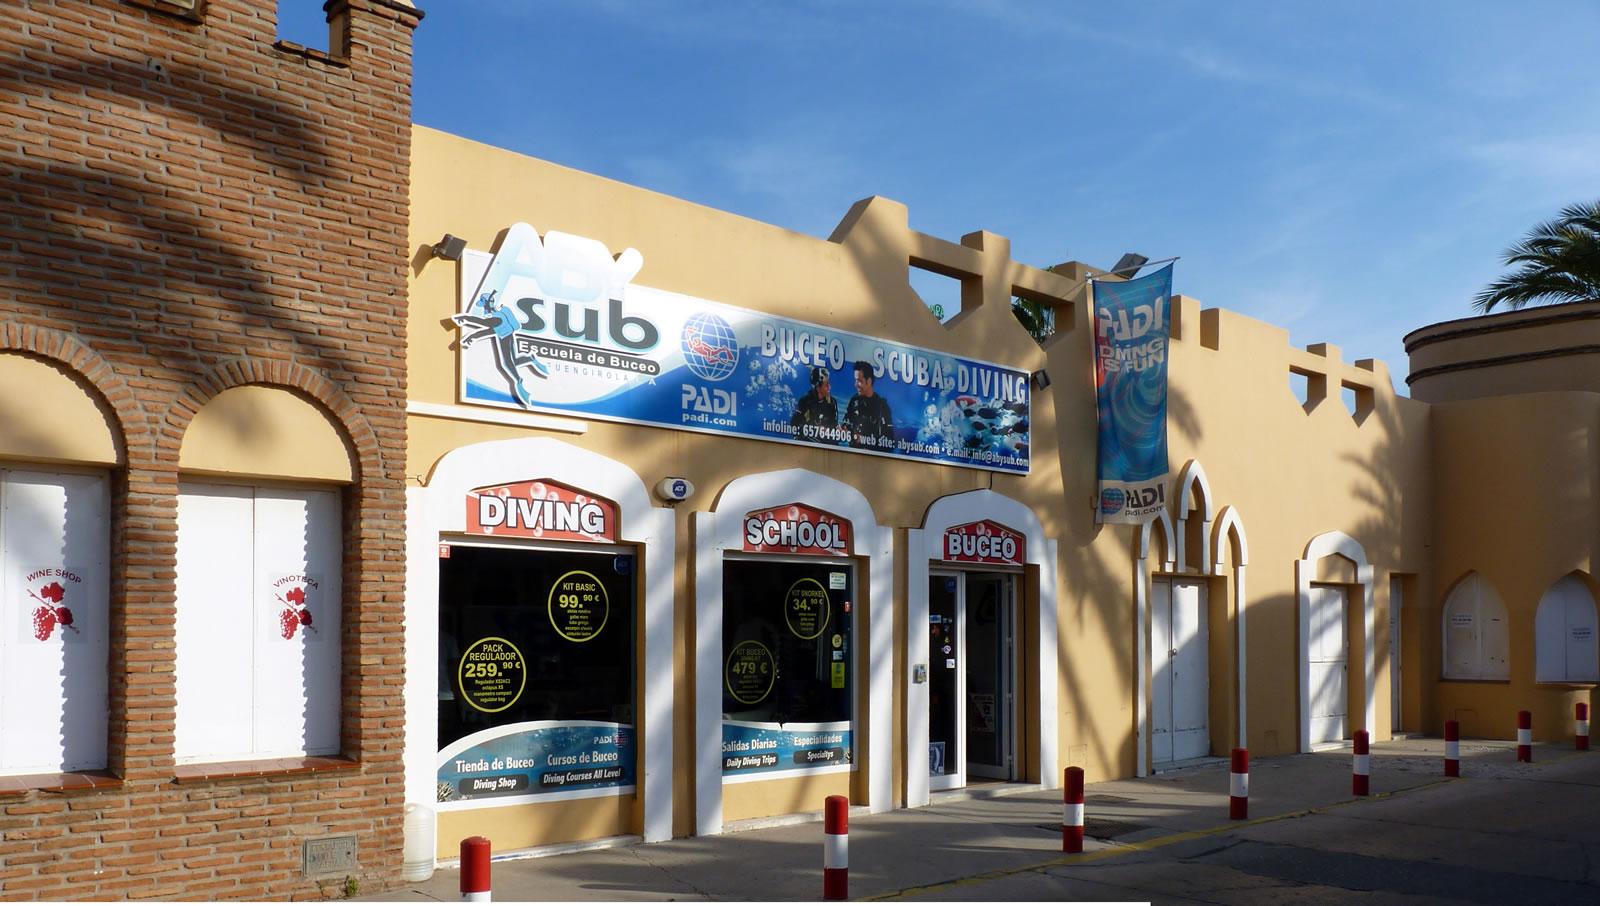 Abysub dive shop in Fuengirola